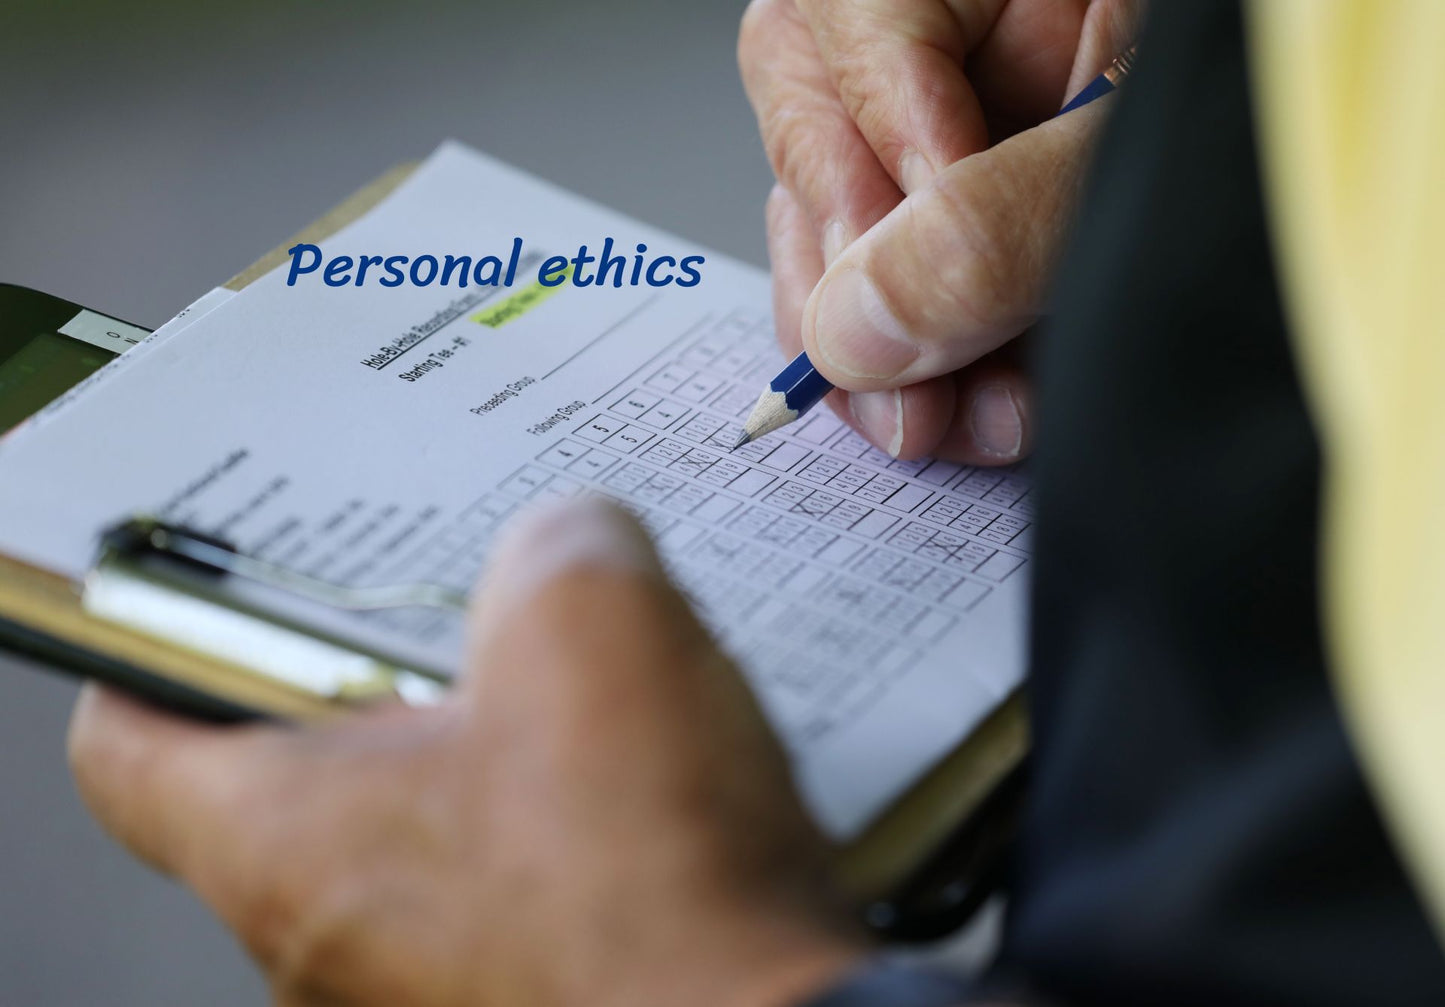 Your 2023 ethics scorecard: reflecting on personal ethics